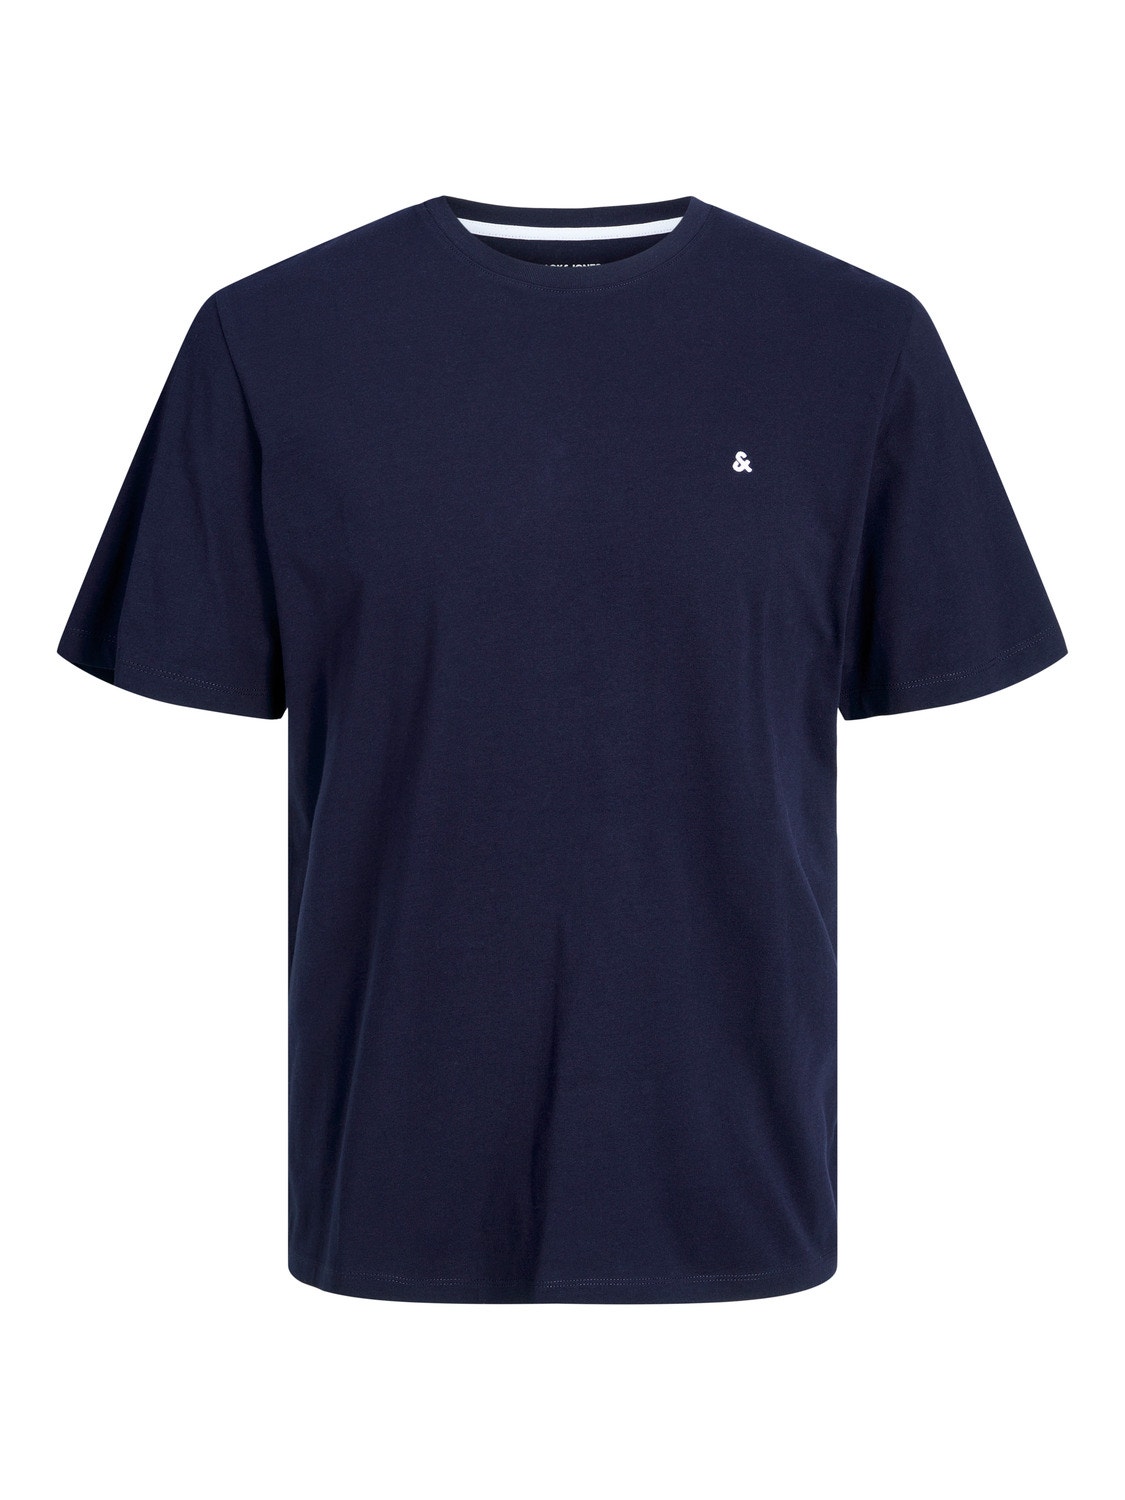 Jack & Jones Plus Size T-shirt Liso -Navy Blazer - 12253778